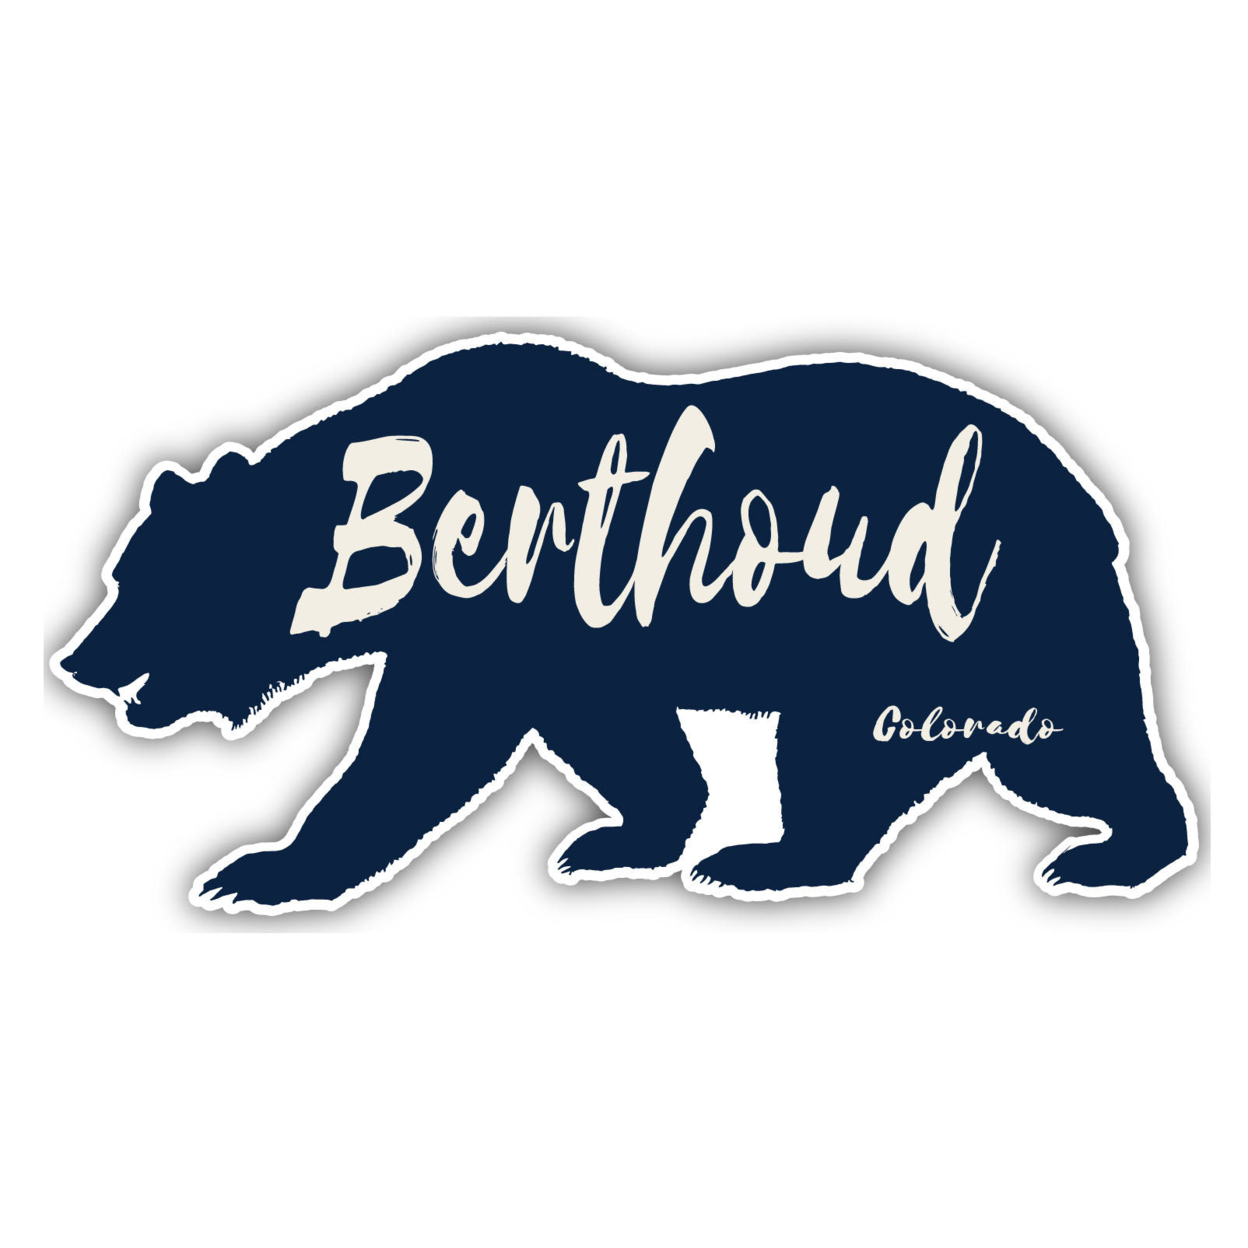 Berthoud Colorado Souvenir Decorative Stickers (Choose Theme And Size) - Single Unit, 10-Inch, Bear